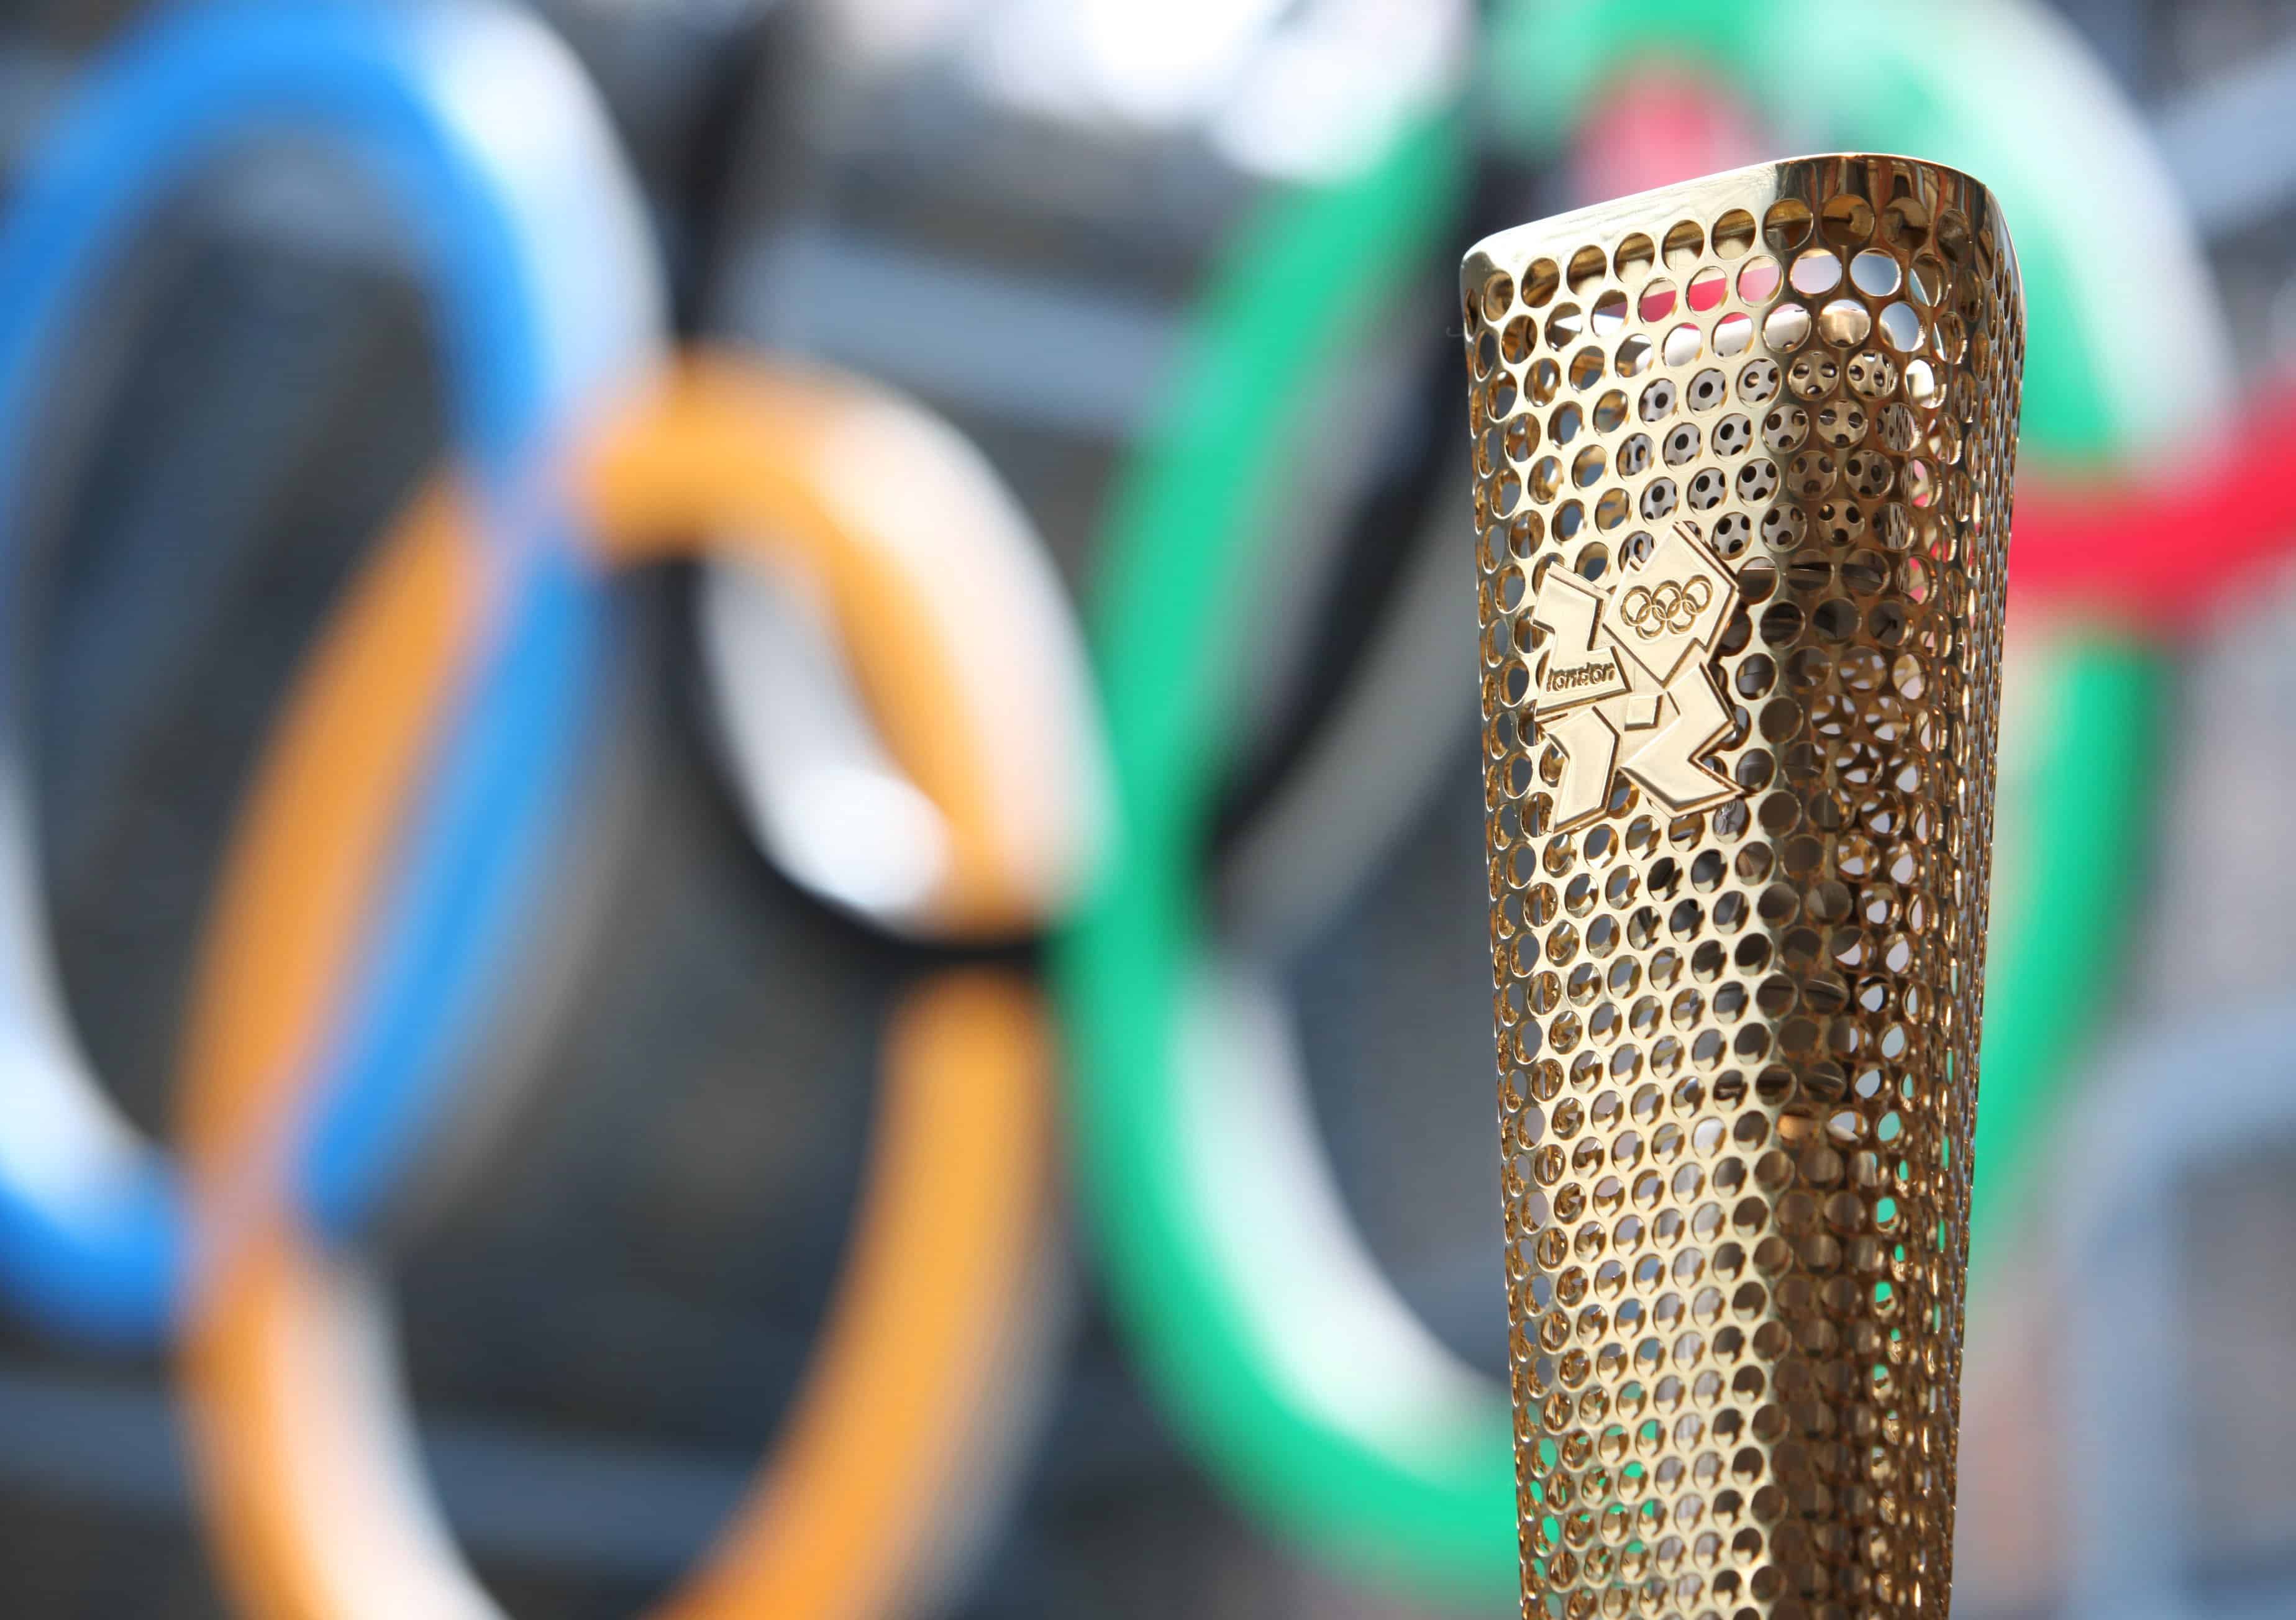 London 2012 Olympic Torch design. Copyright London 2012.